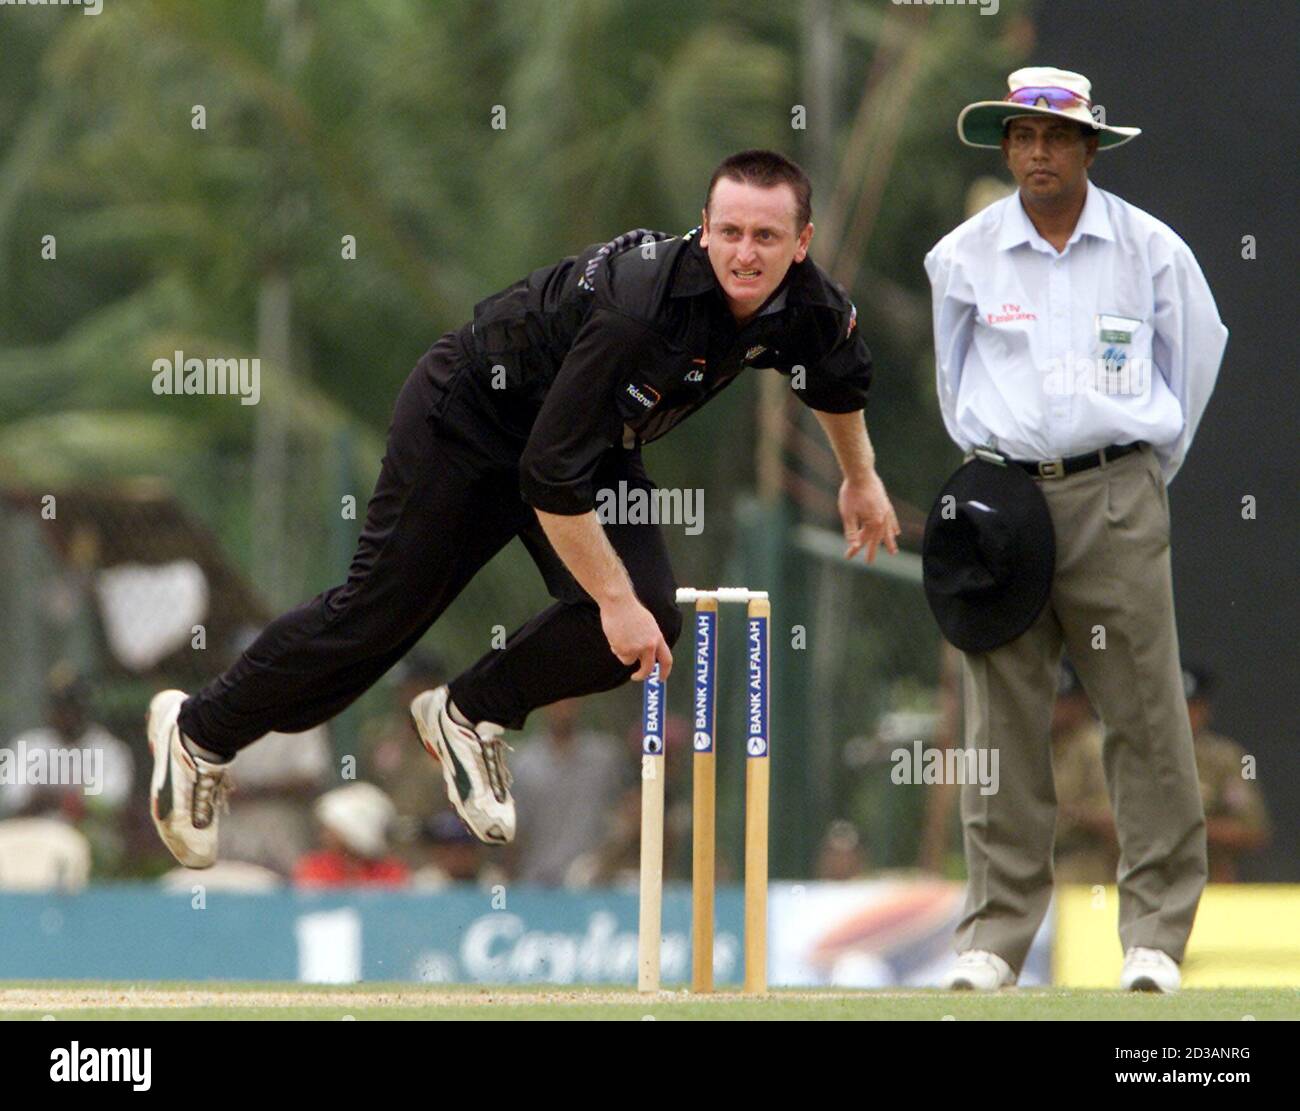 New Zealand's Scott Styris bowls as Sri Lankan umpire Asoke de Silva looks on during a one day cricket match against Pakistan in Dambulla, Sri Lanka, on May 11, 2003. REUTERS/Anuruddha Lokuhapuarachchi  AL/CP Stock Photo